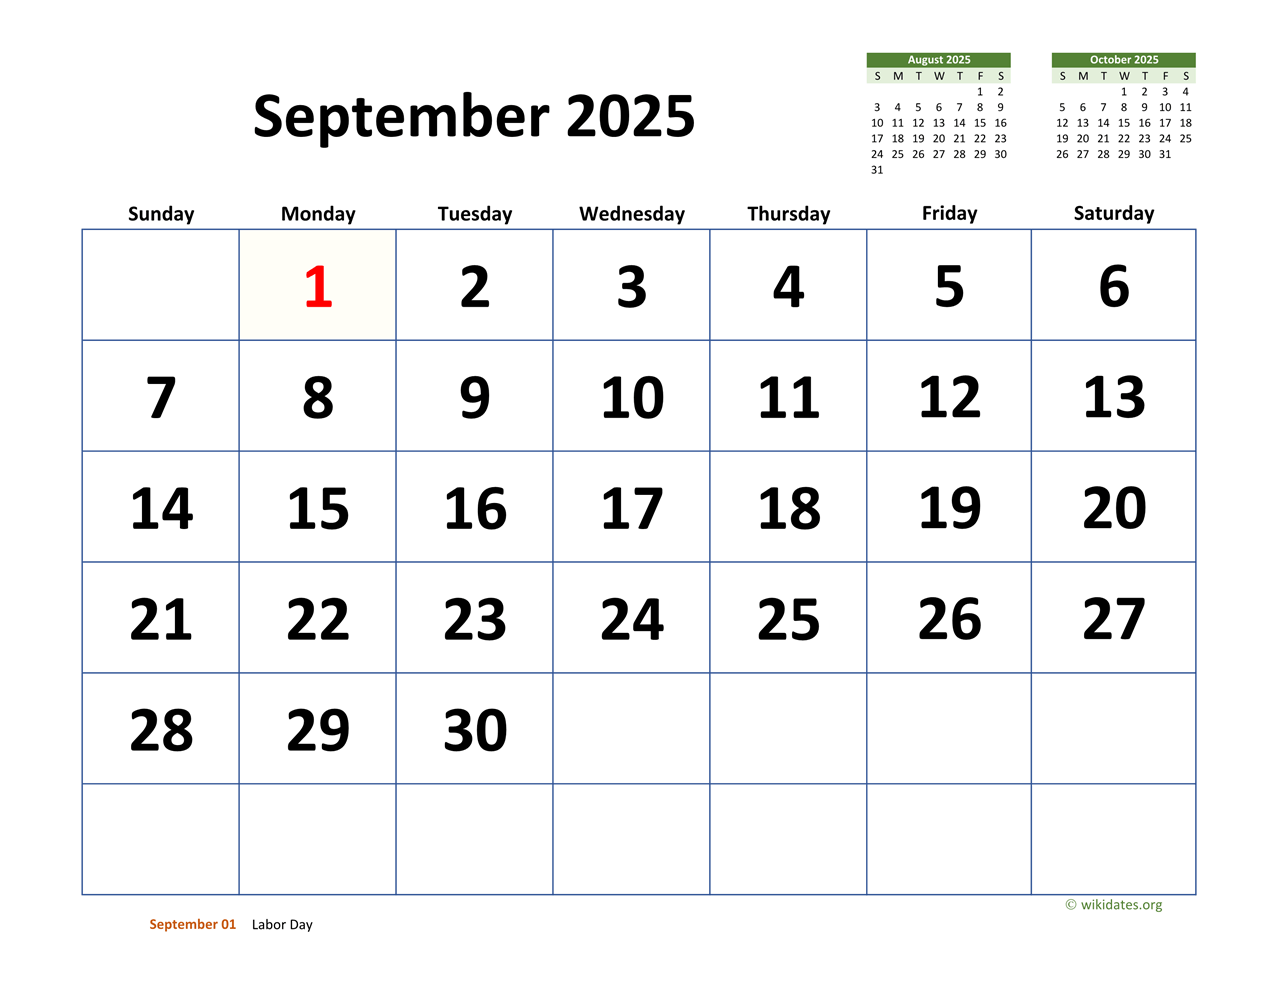 September 2025 Calendar Image 